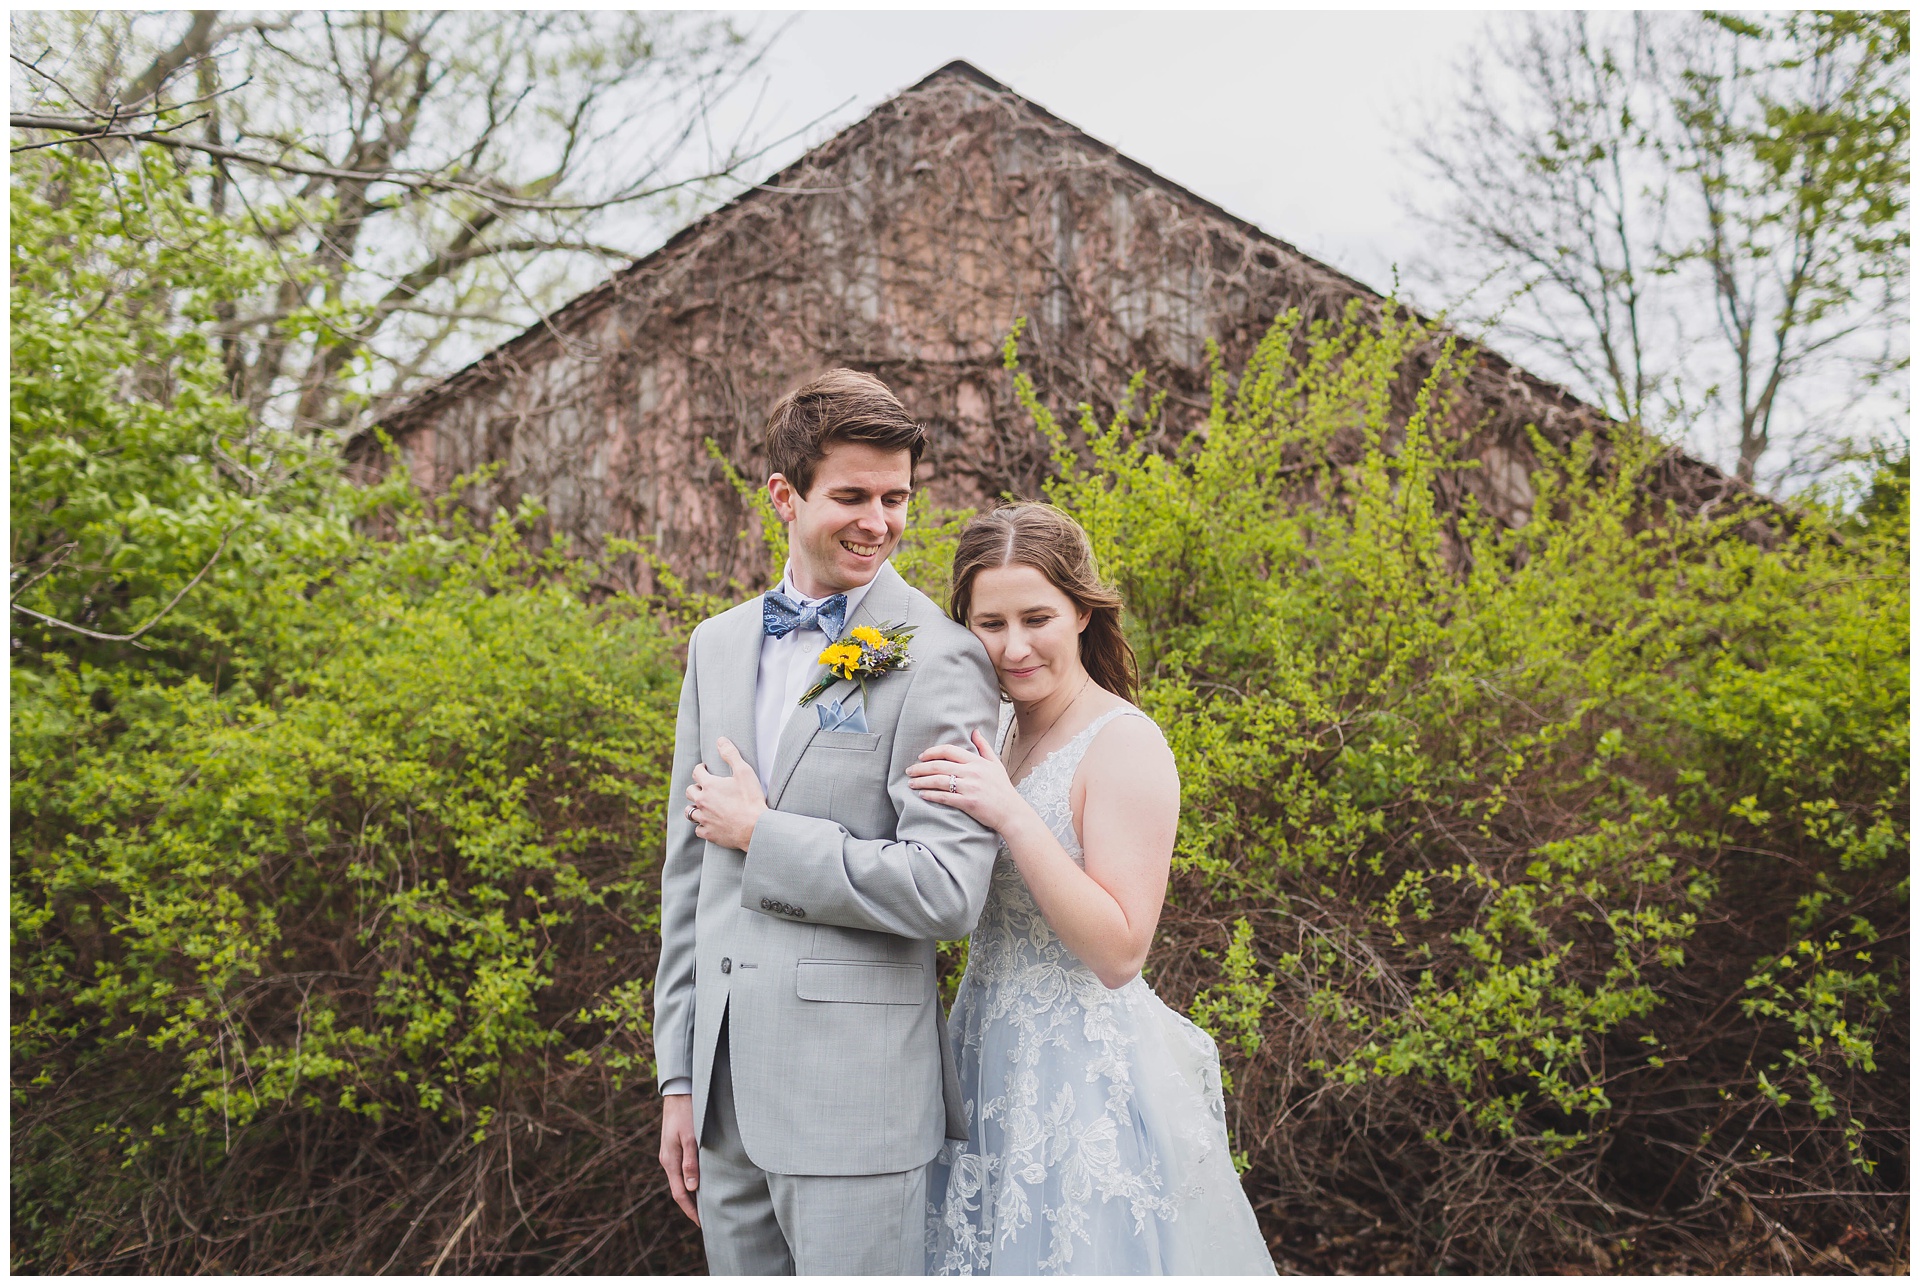 Wedding photography at The Legacy at Green Hills by Kansas City wedding photographers Wisdom-Watson Weddings.